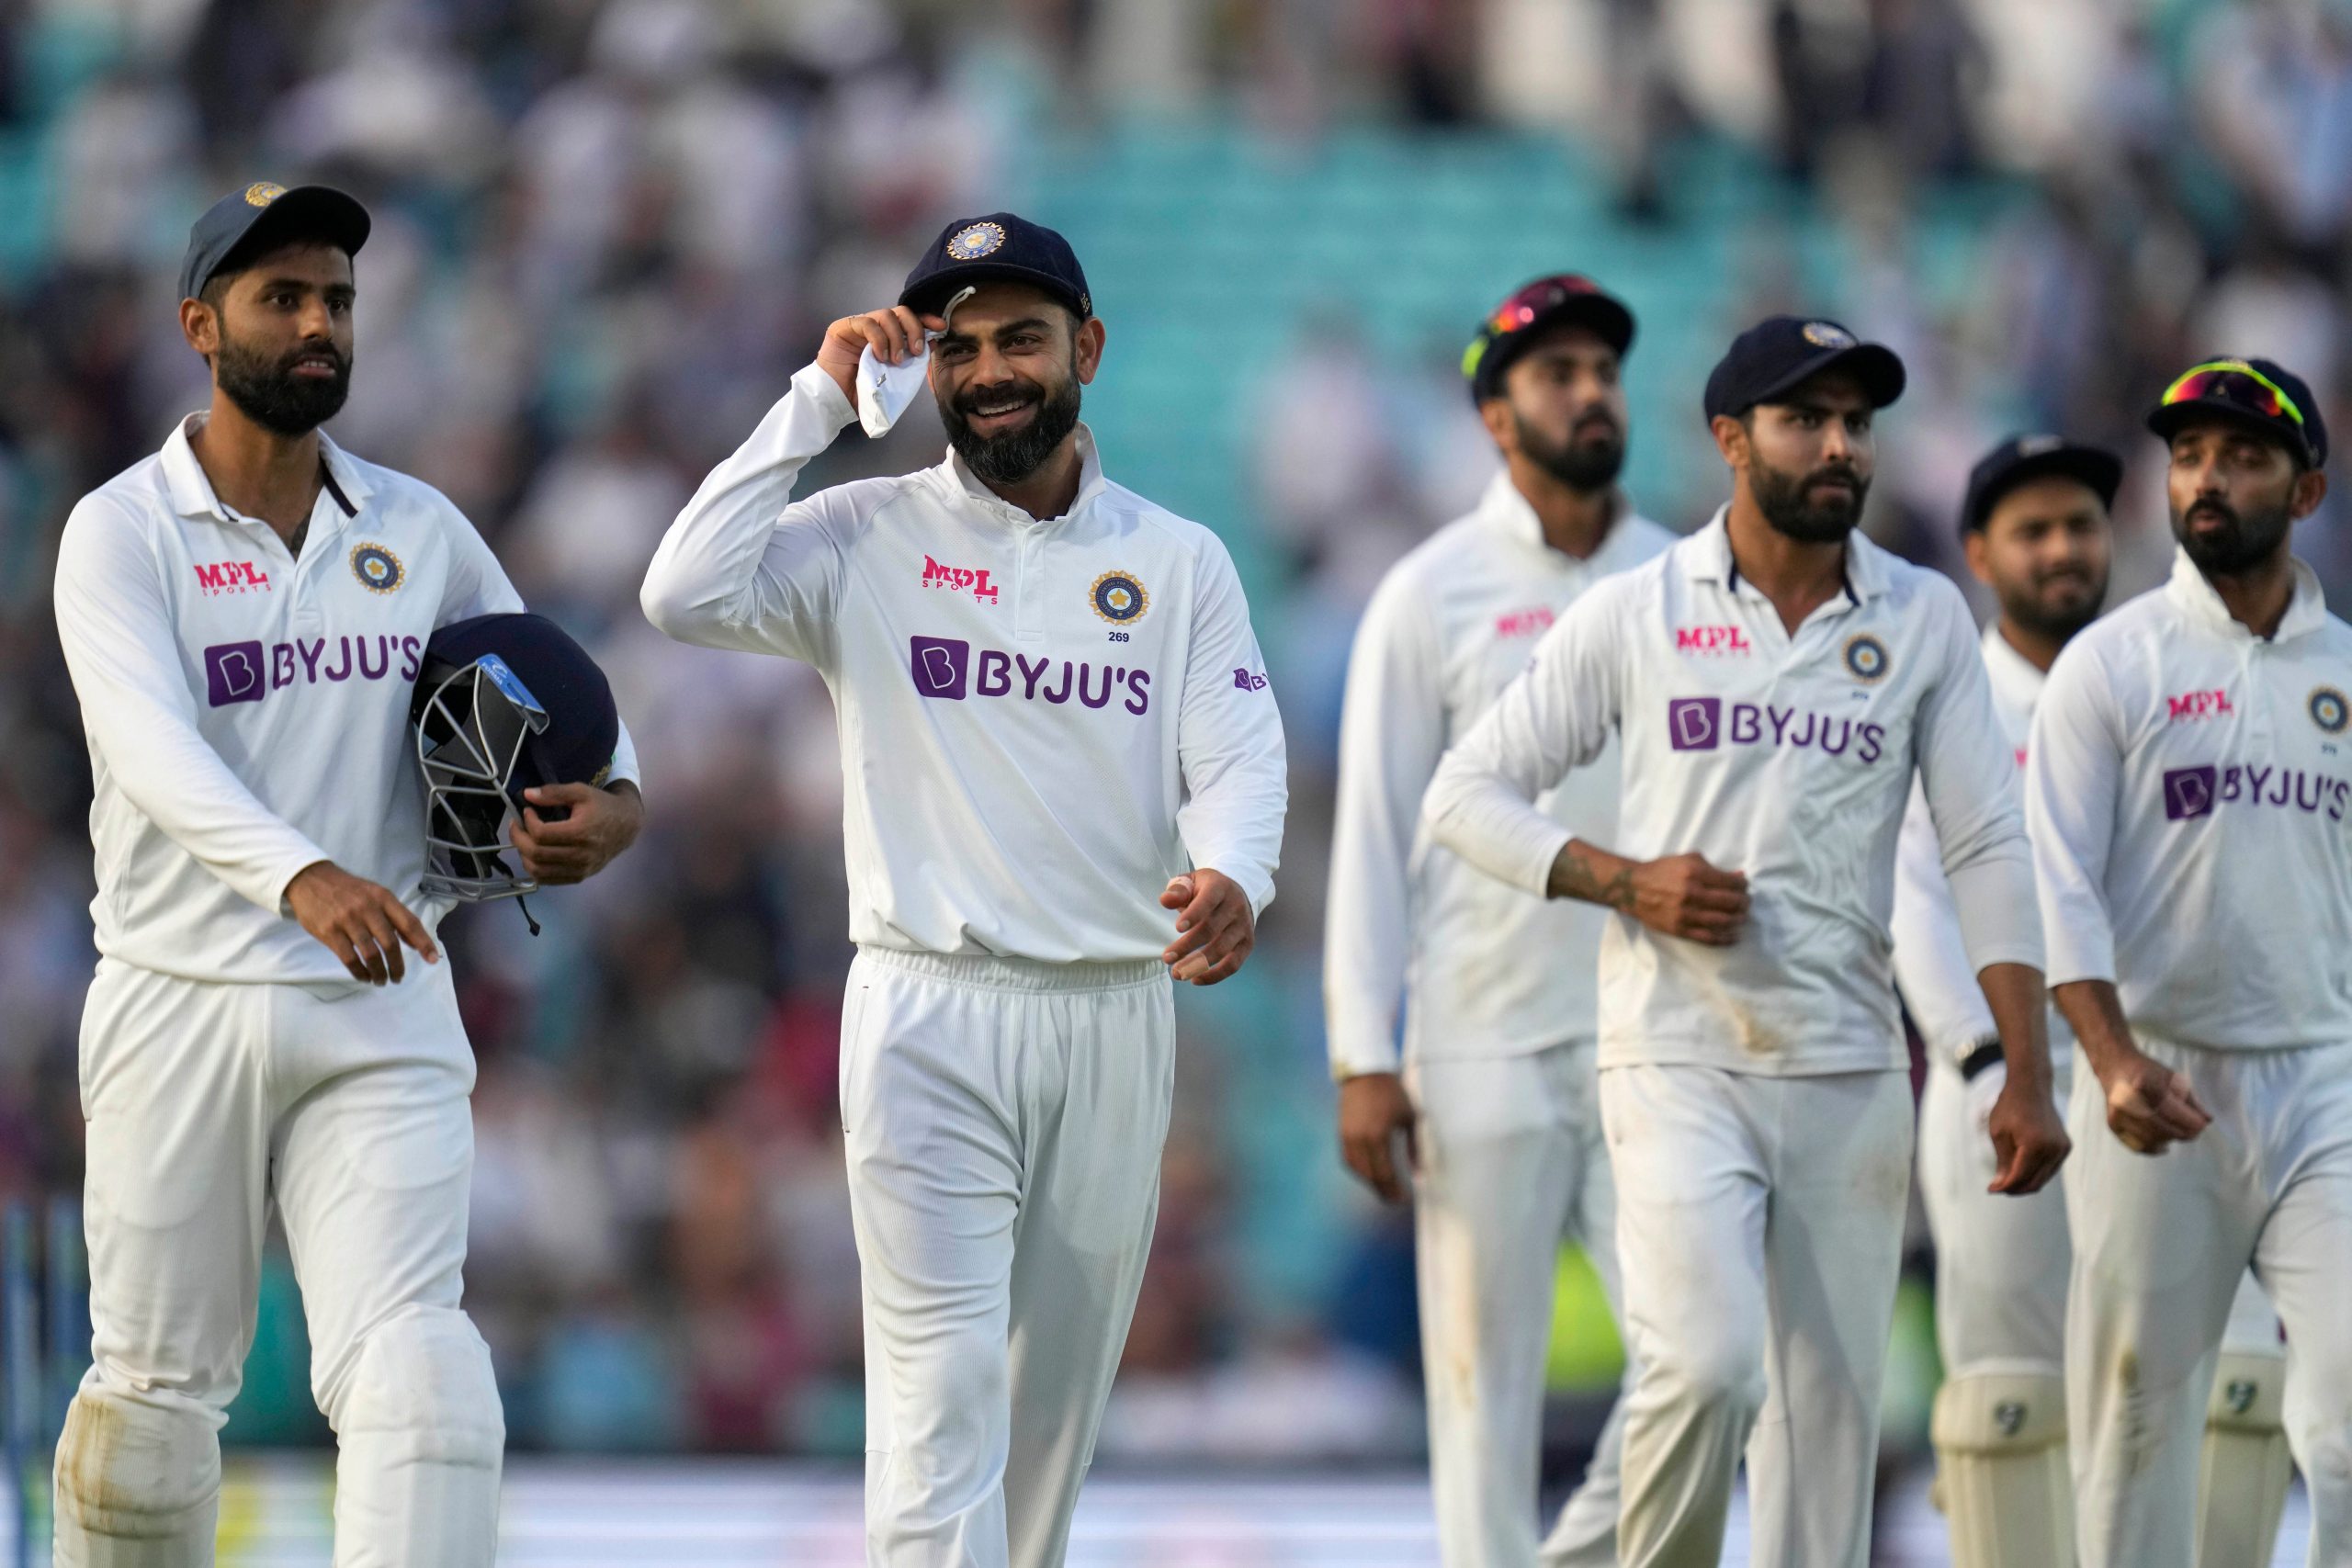 5th Test: Virat Kohli and team go in for the kill vs England